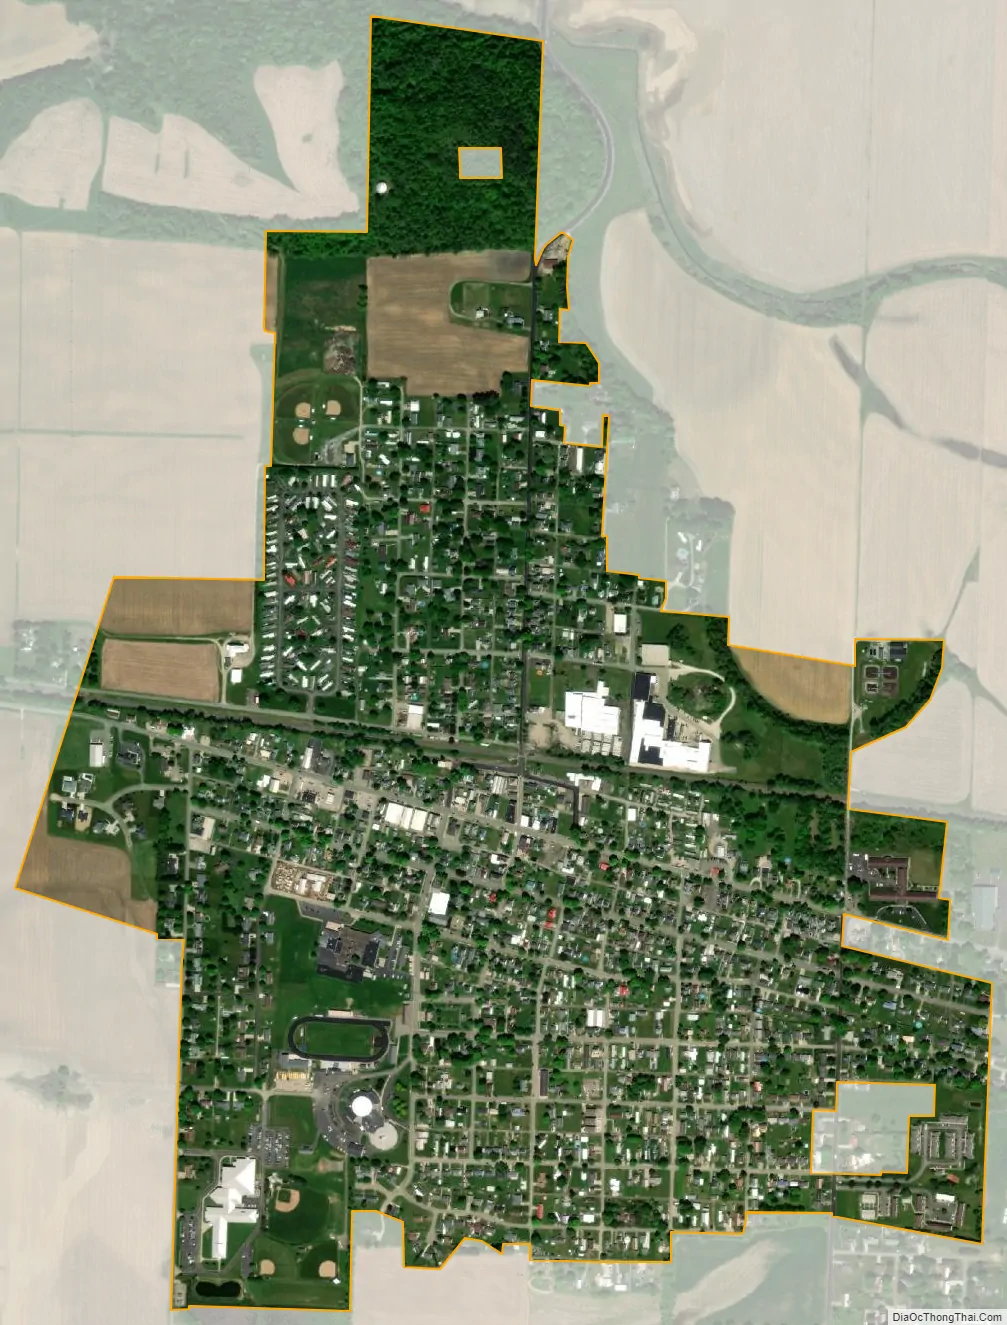 Map of West Lafayette village, Ohio